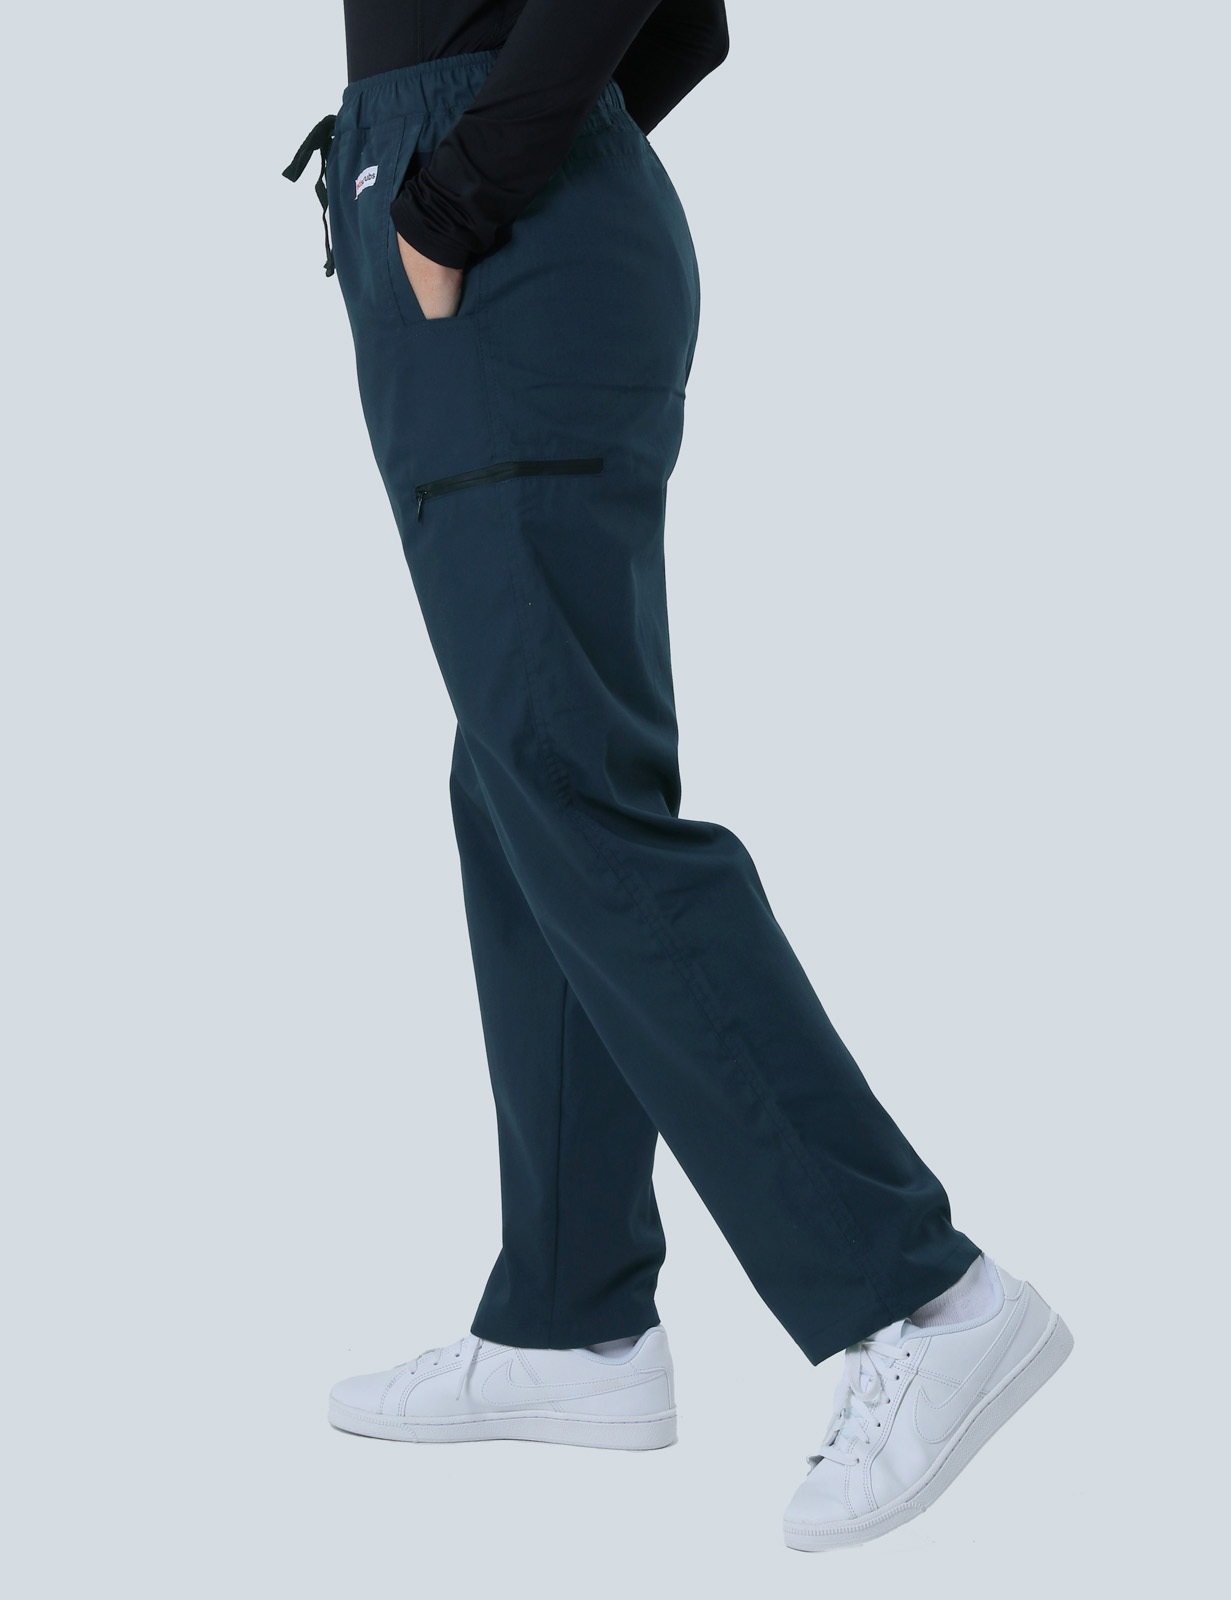 Women's Utility Pants - Navy - X Large